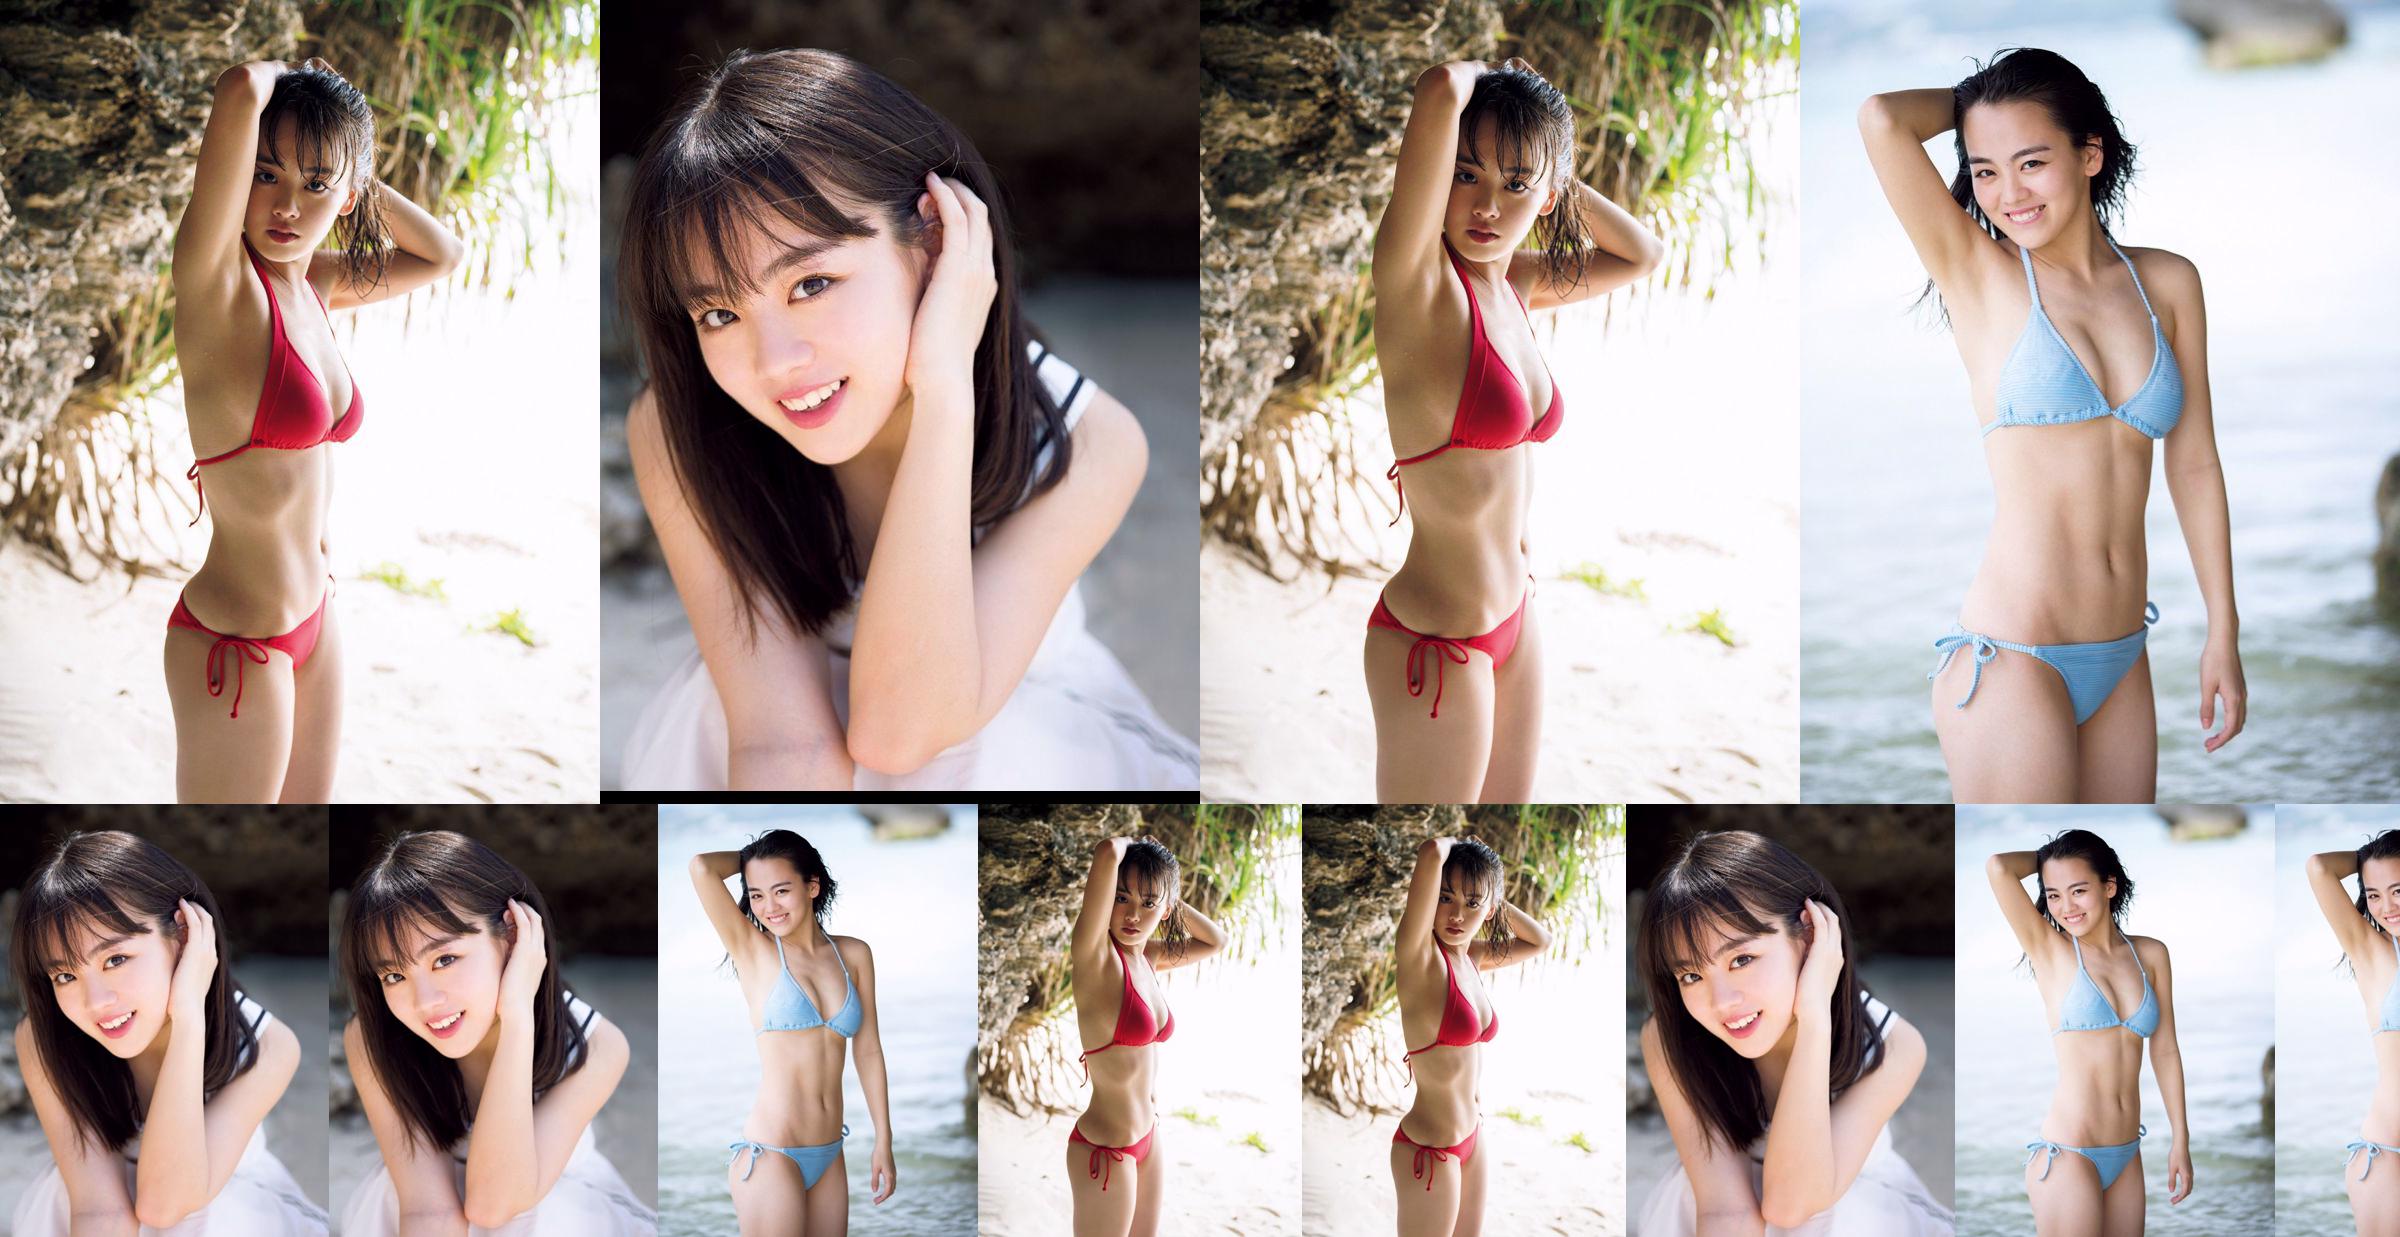 [FRIDAY] Rikka Ihara << Former captain of Tomioka High School dance club debuts in bikini >> Photo No.2aa36e Page 1